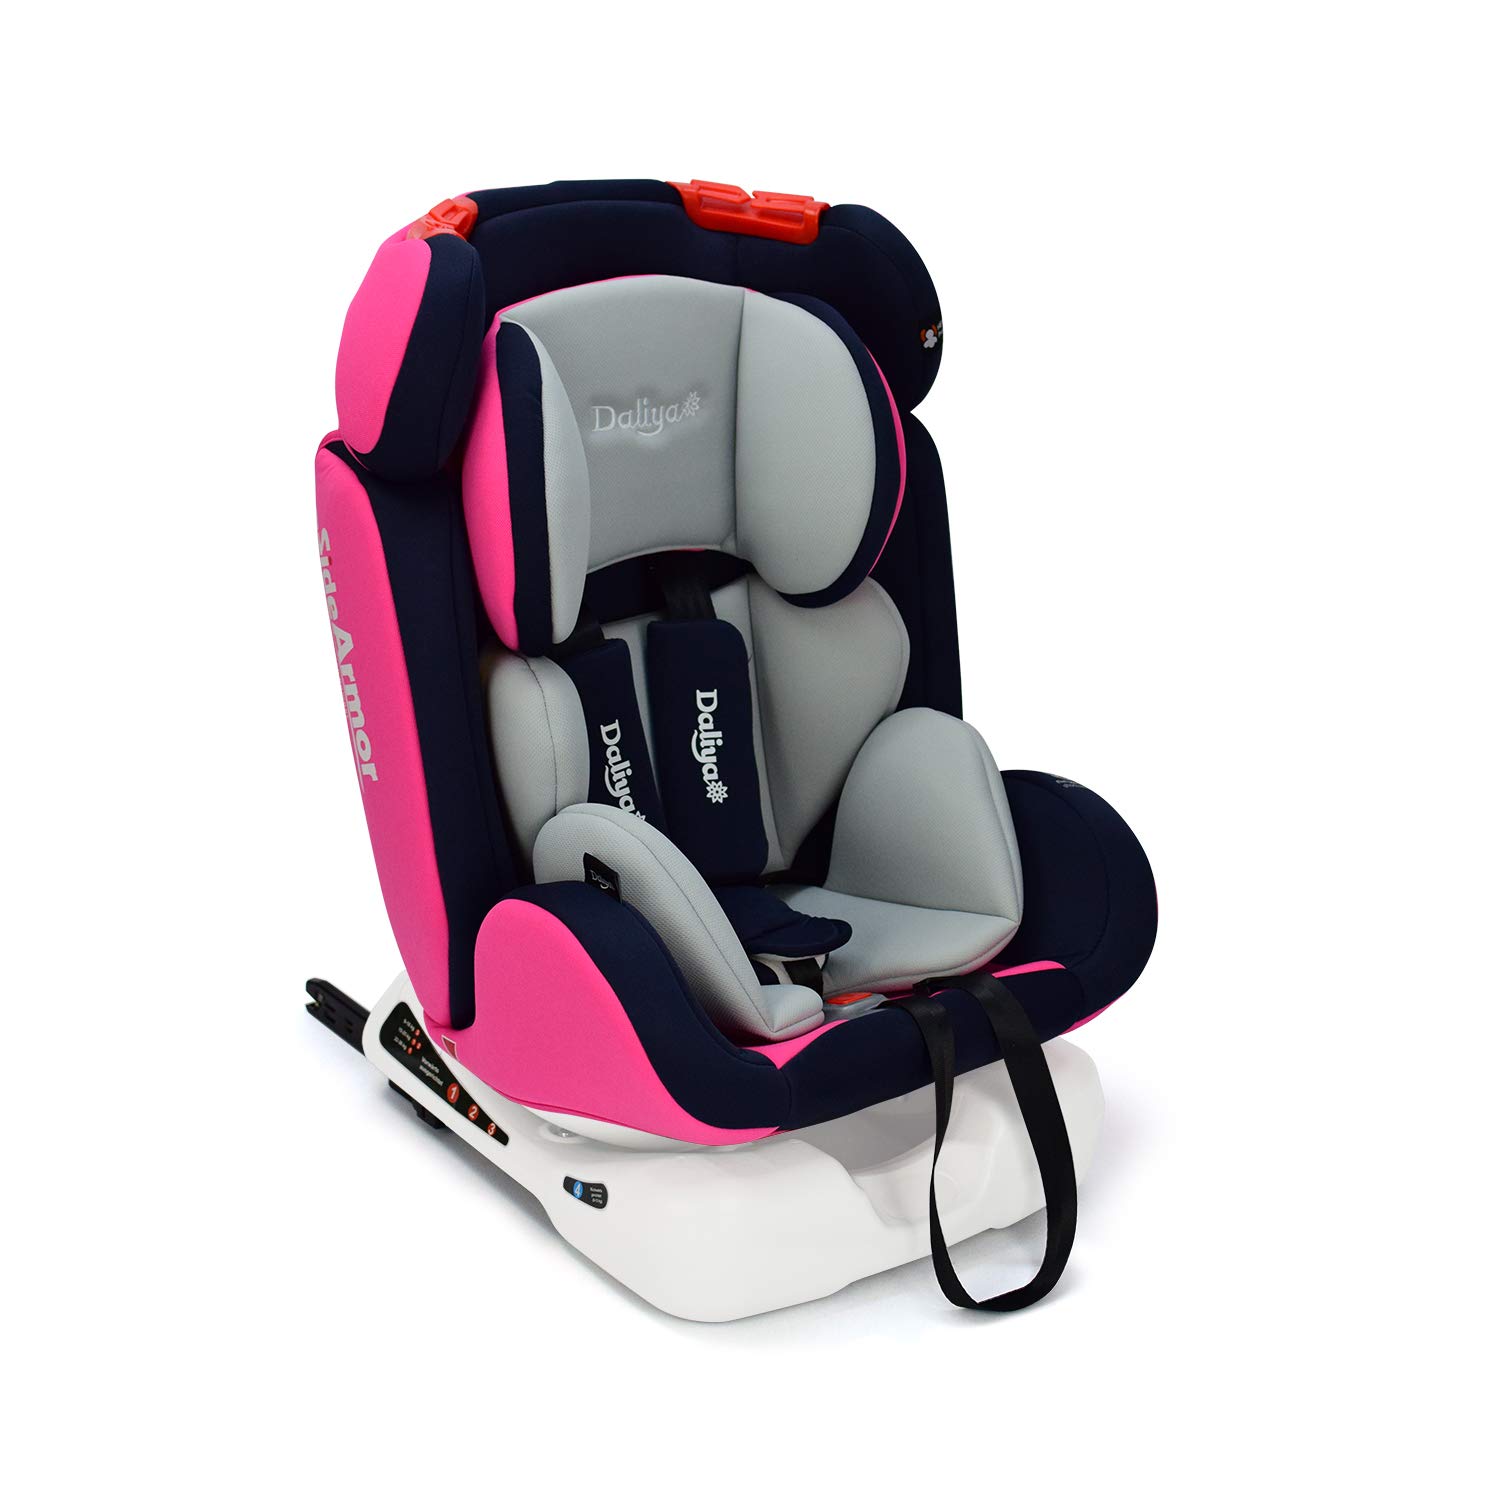 Daliya® Sitorino Child Seat 0-36 kg with Isofix & Top Tether I Car Seat Group 0+1+2+3 I 5-Point Seat Belt I Pink